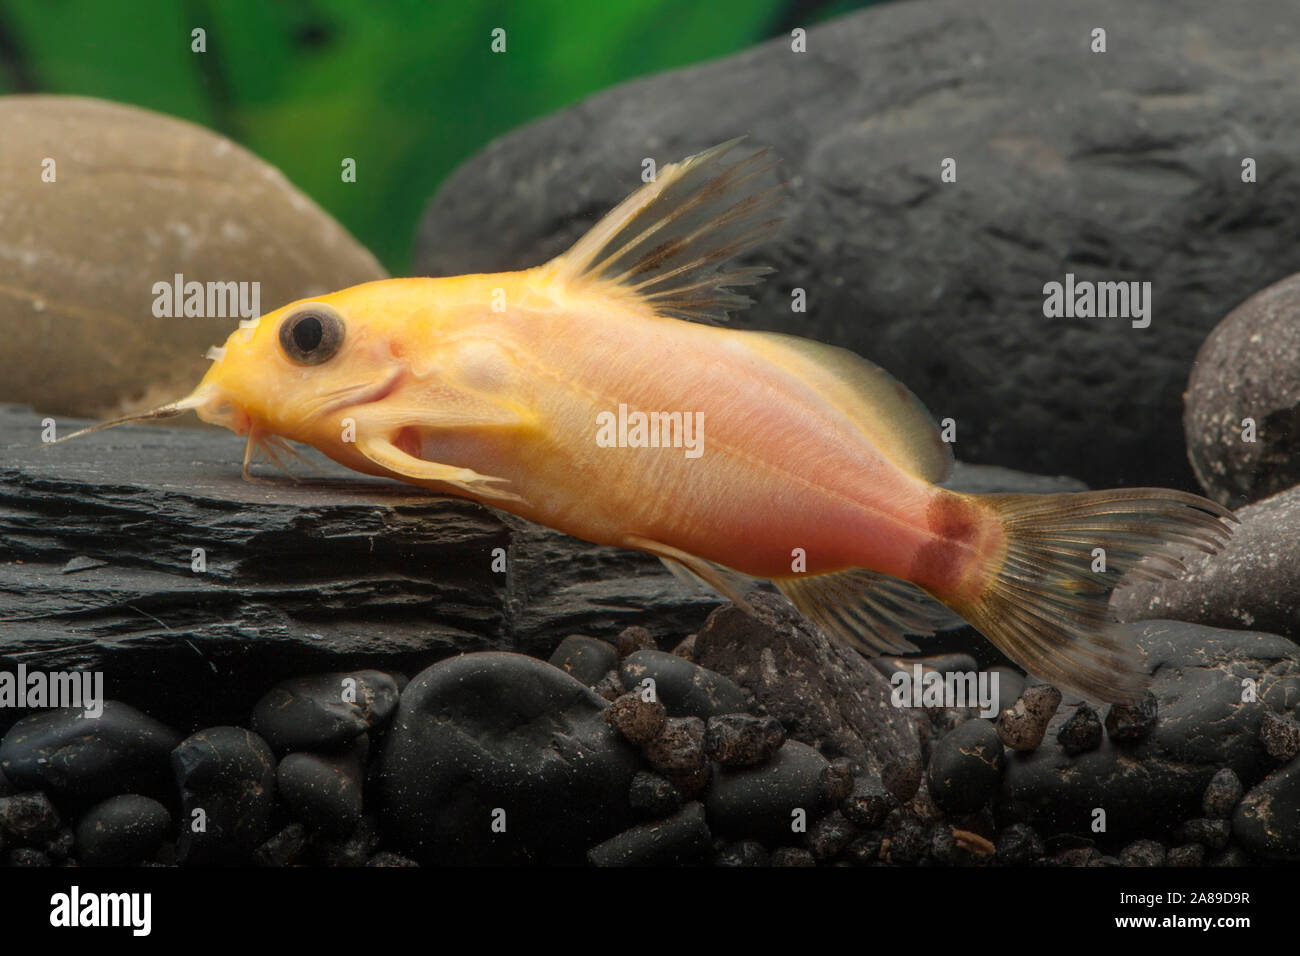 Synodontis nigrita Gold,Rueckenschwimmer Kongowels,Nigerian upside down catfish Stock Photo